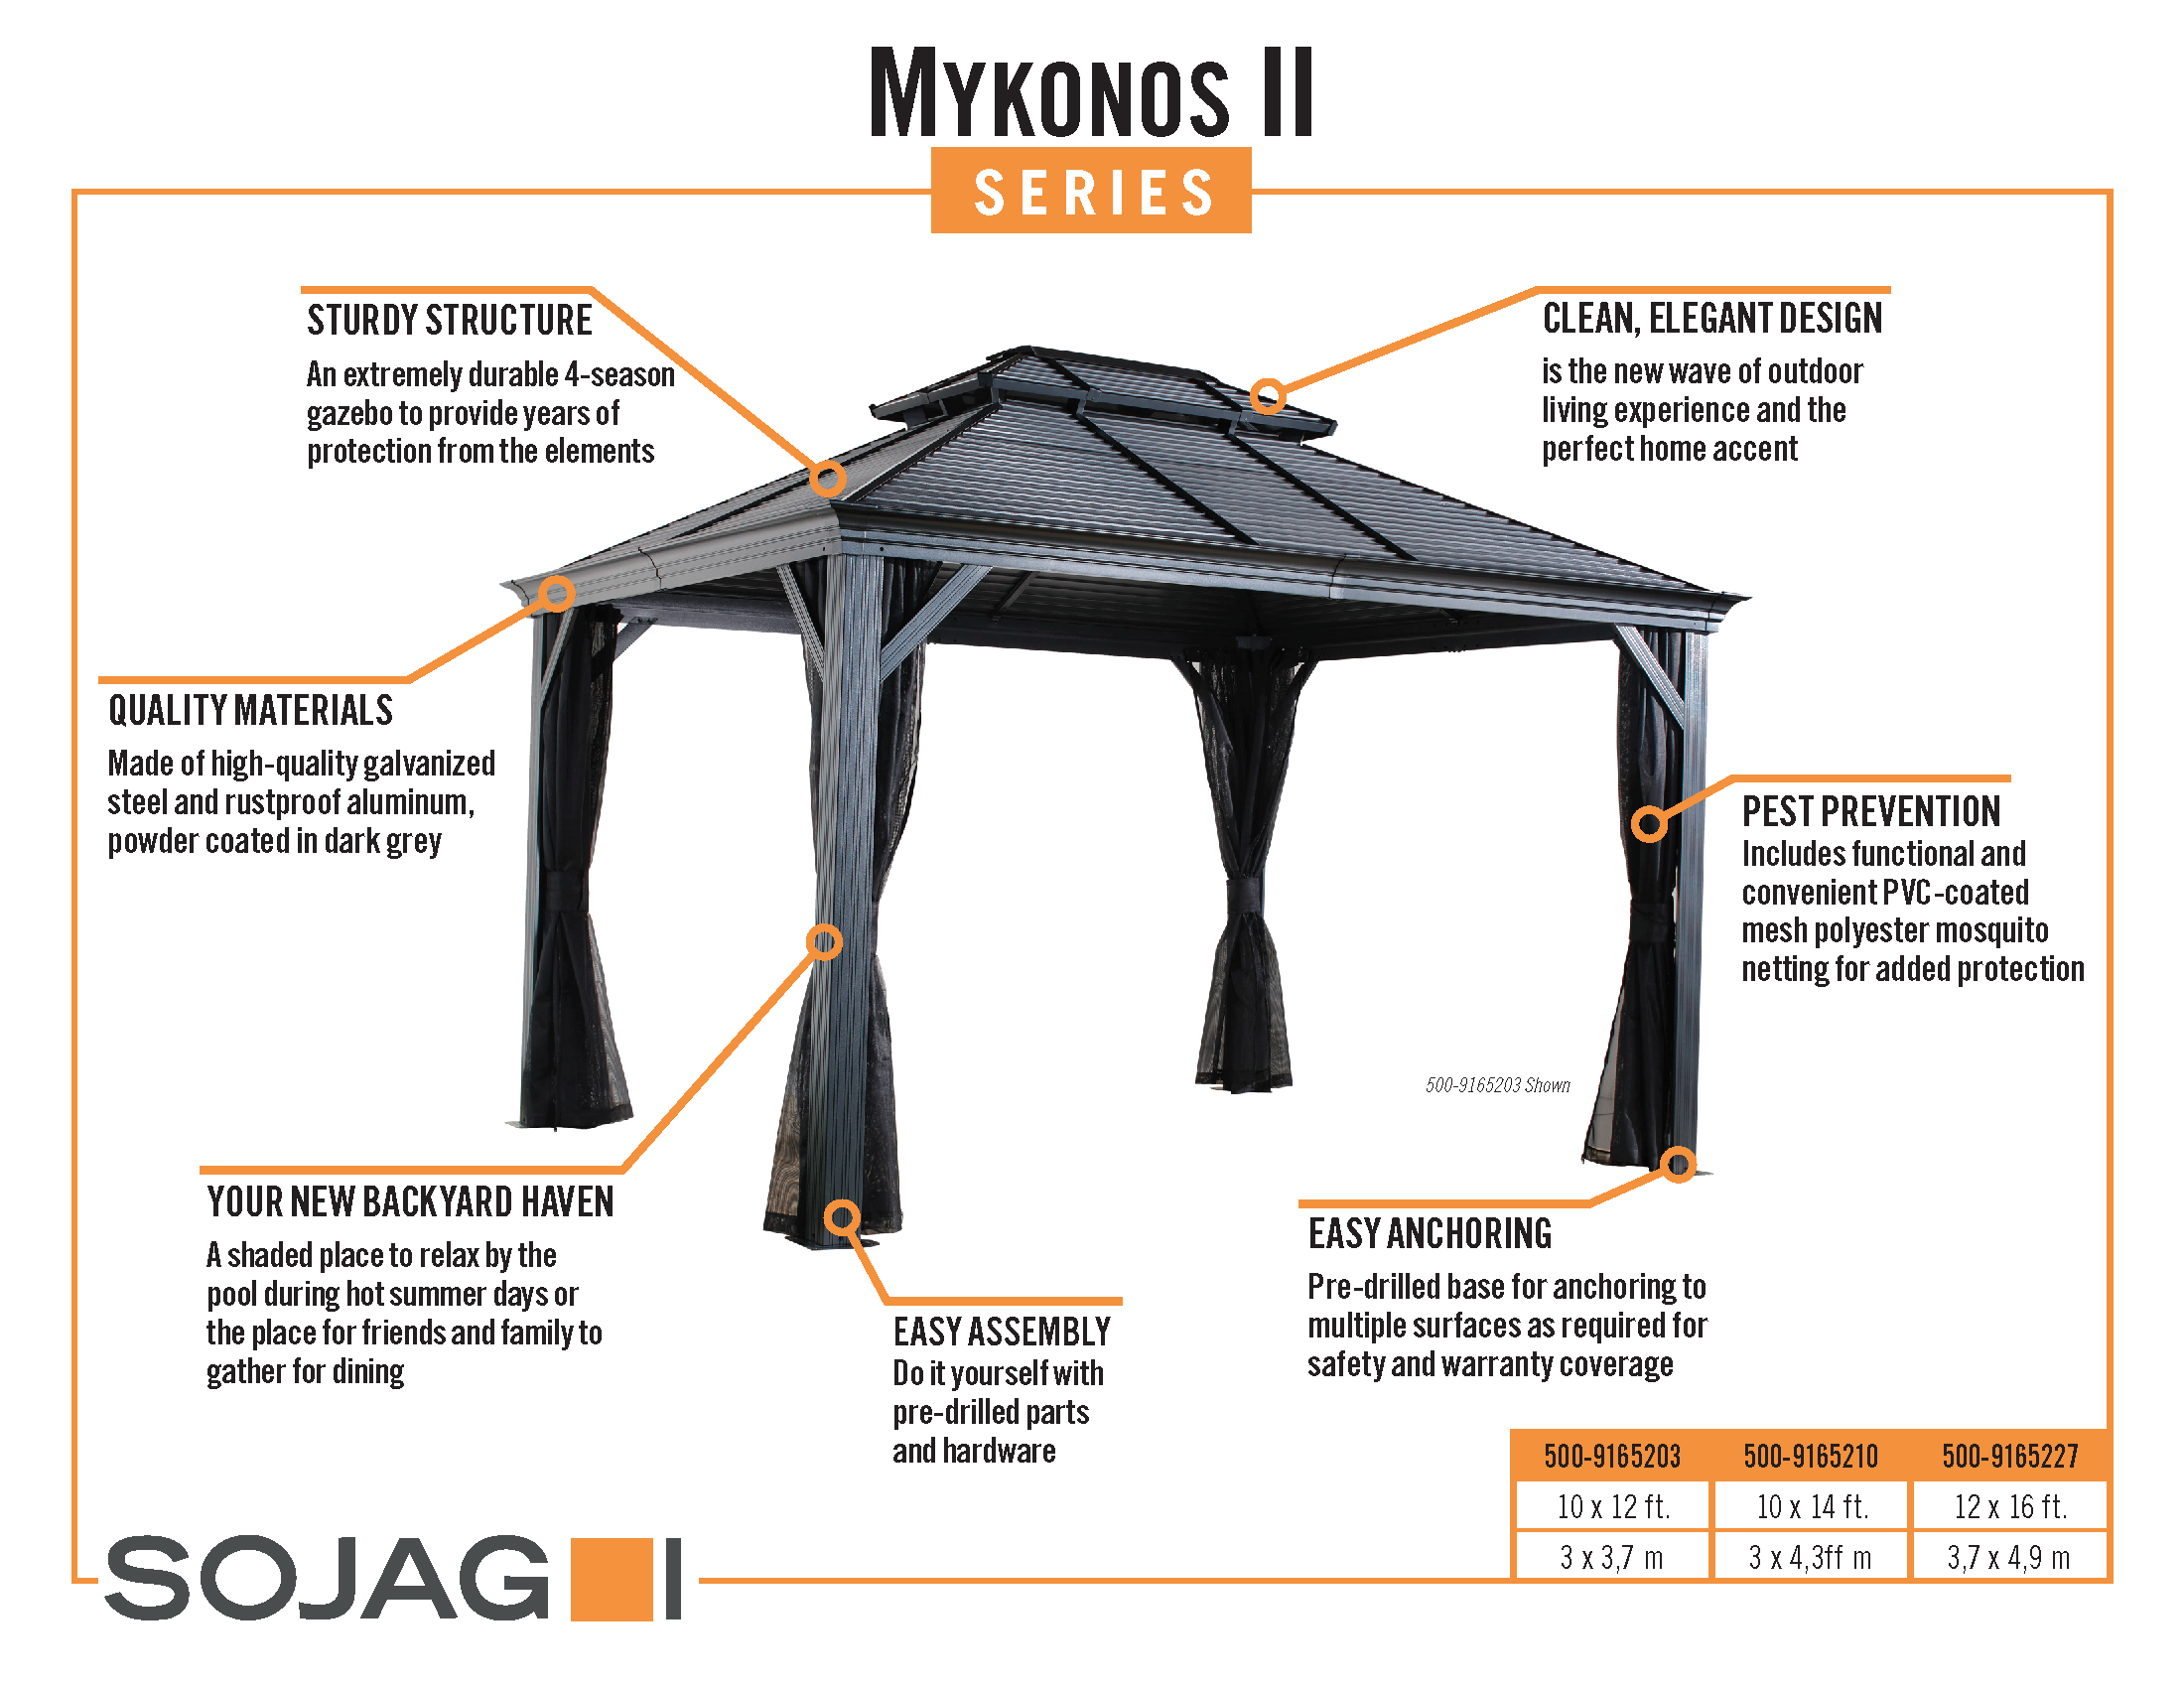 Sojag Mykonos II 10 ft. x 12 ft. Gazebo